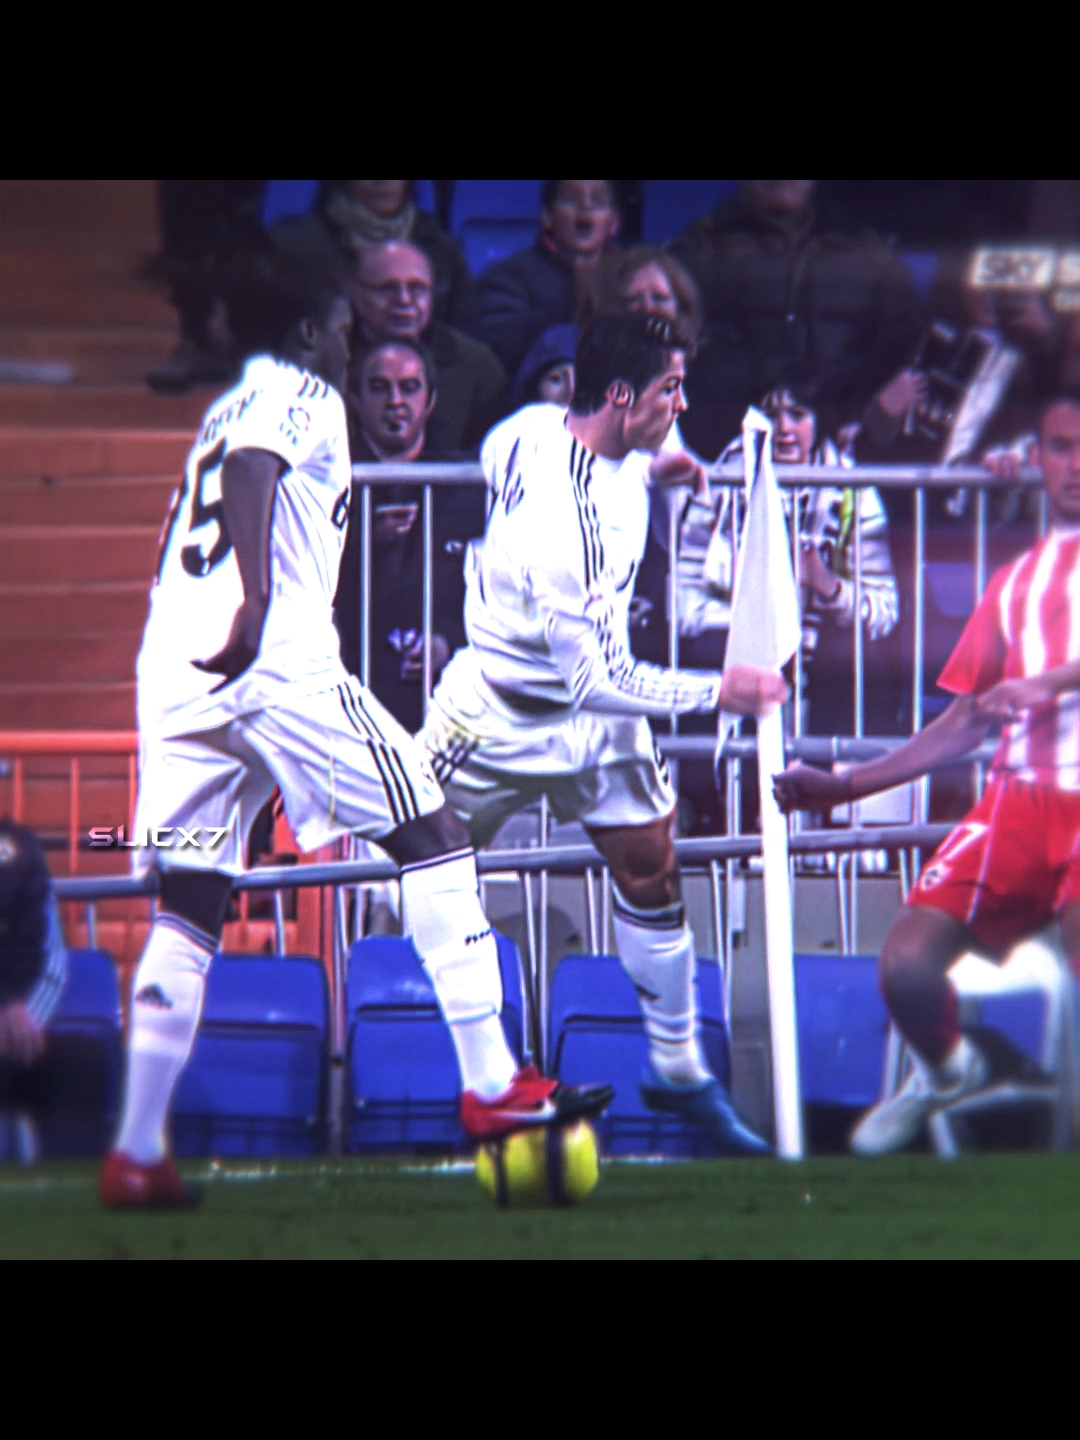 Bro thought he's kicking the ball 💀🙏 #cristianoronaldo #footballedit #realmadrid #cr7 #fyp #viral